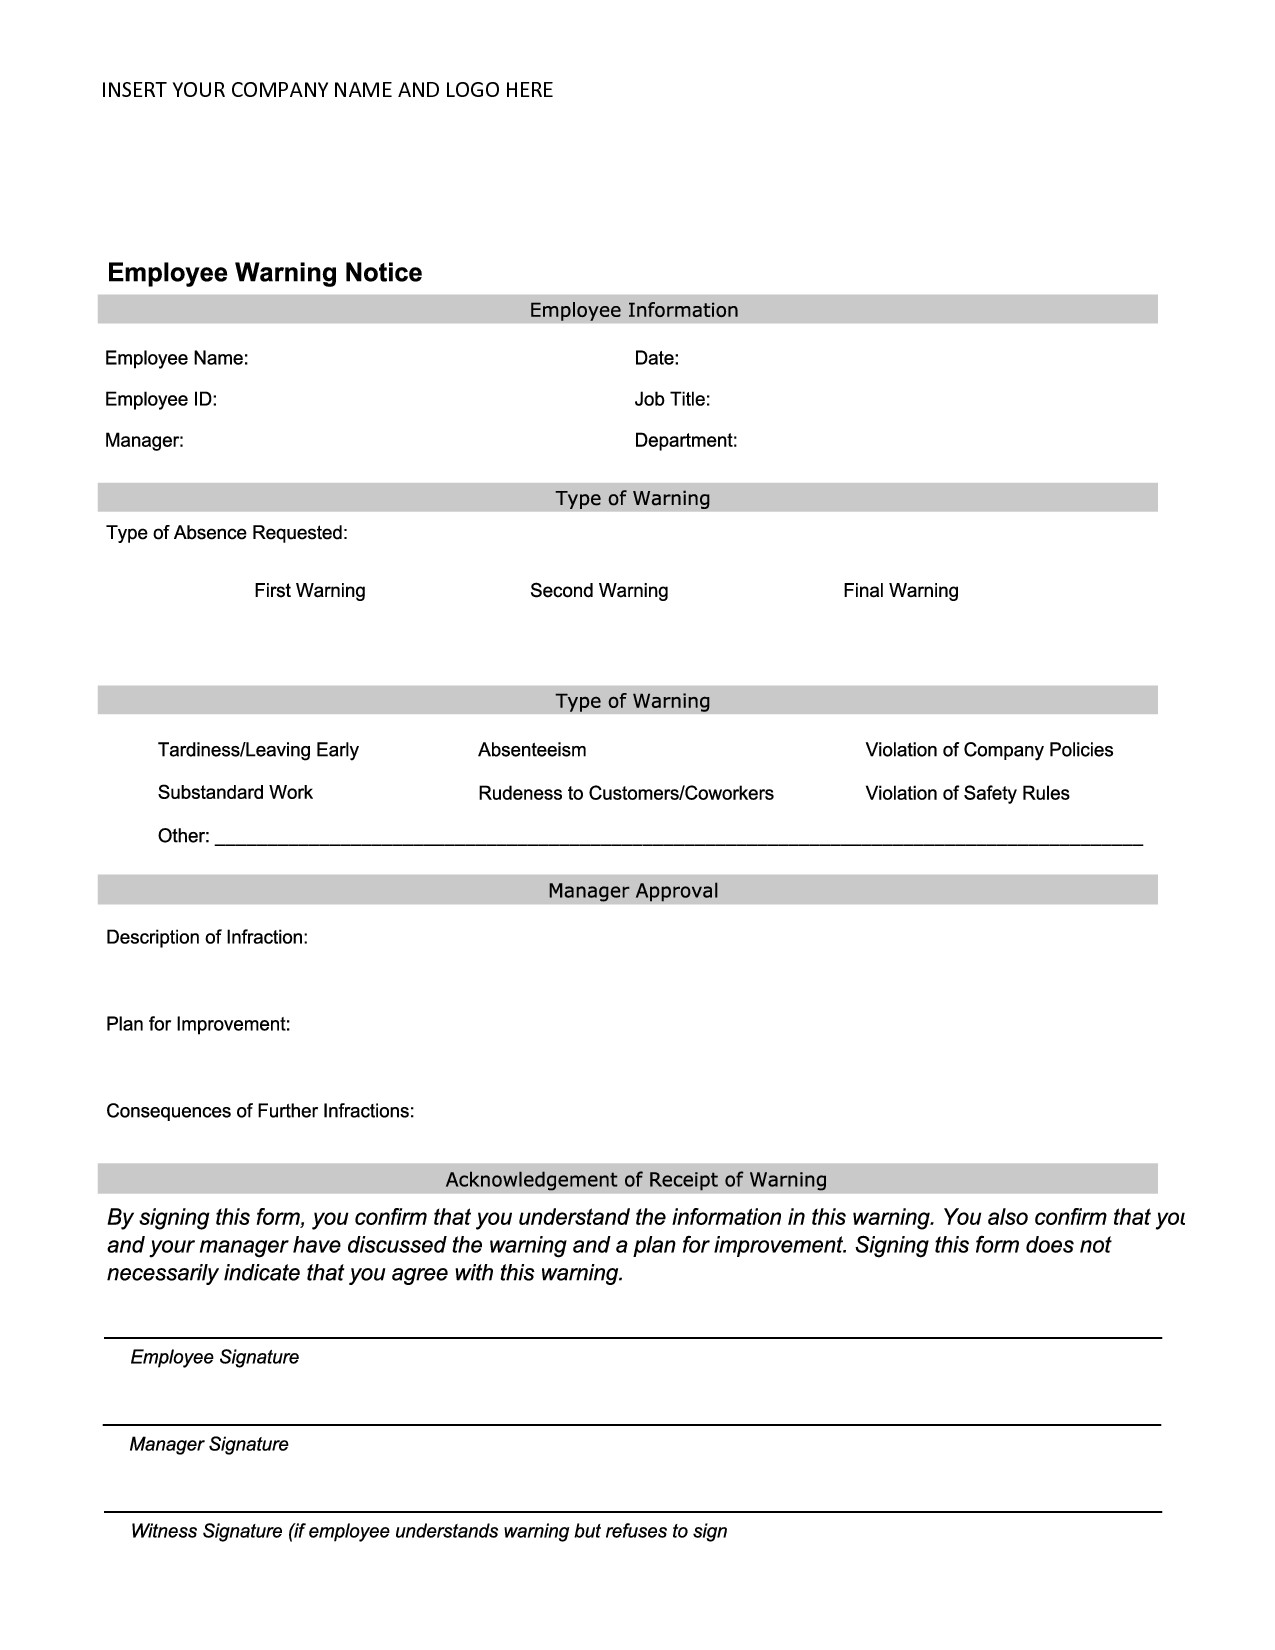 Employee Warning Notice form Employee Warning Notice Employee forms